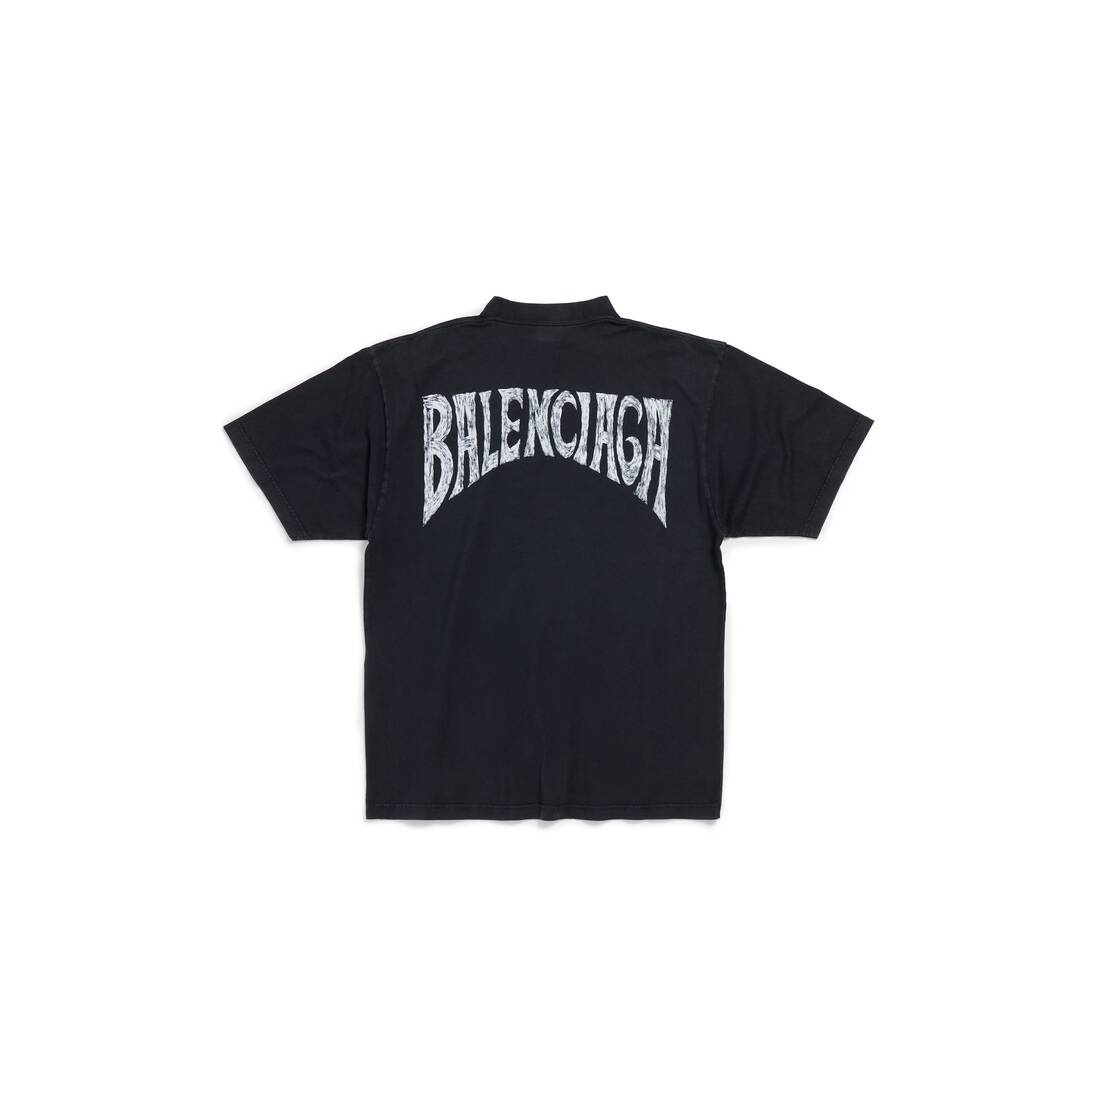 Balenciaga Hand-drawn T-shirt Medium Fit in Black Faded - 2